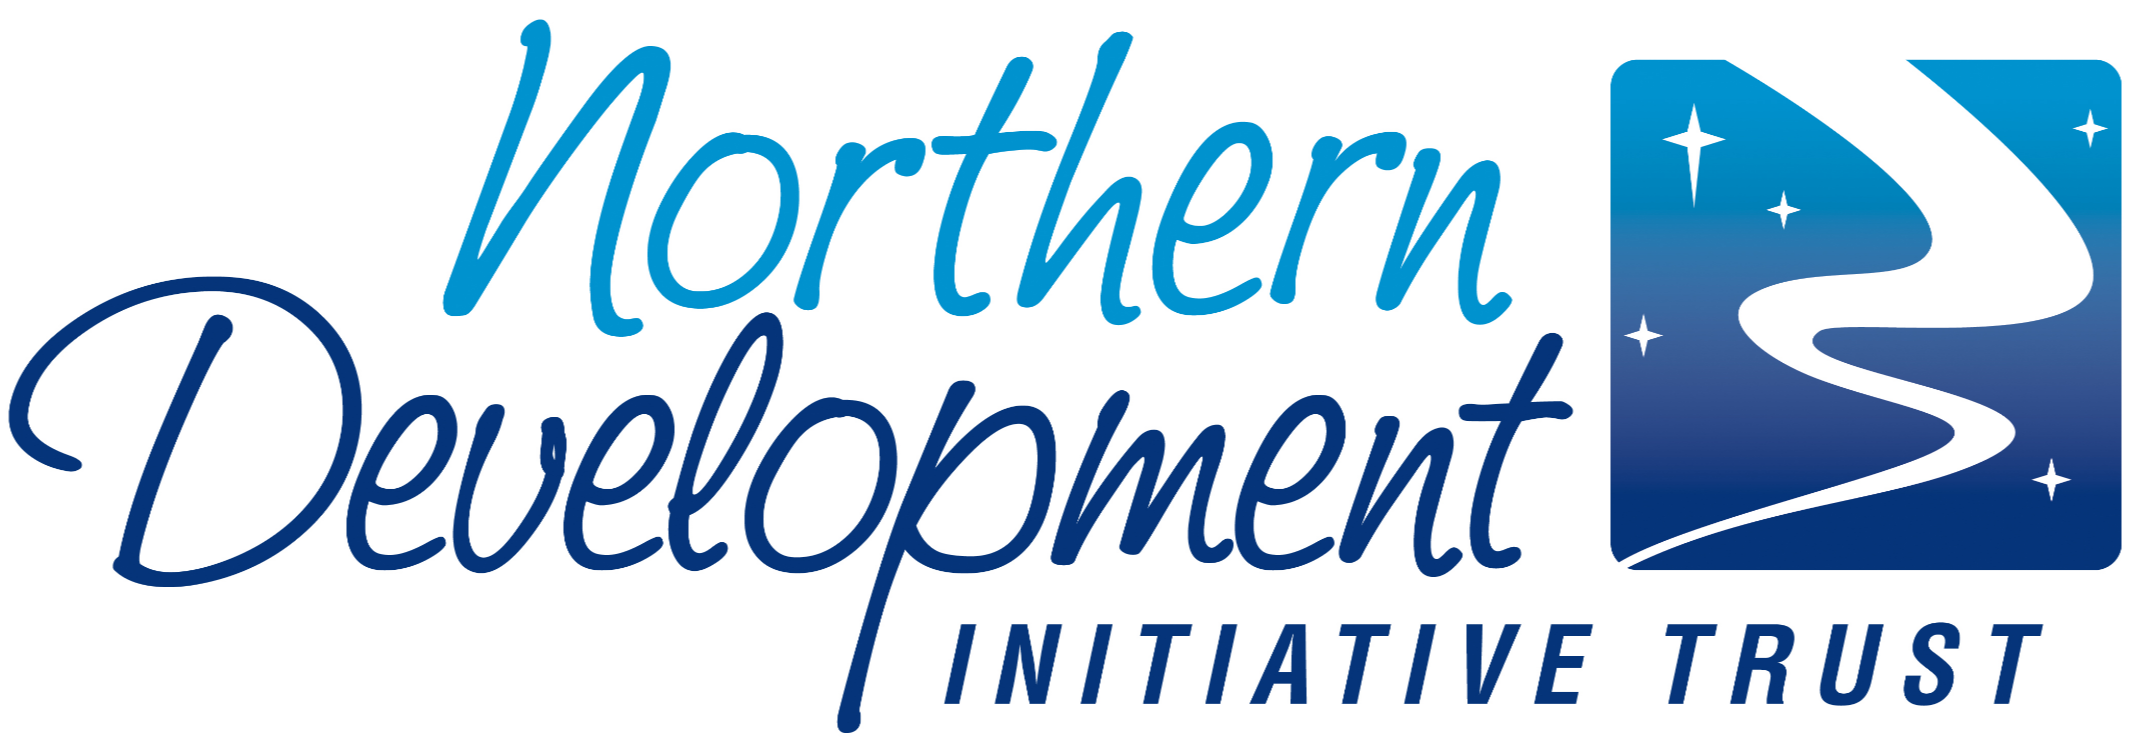 Northern Development Initiative Trust Logo